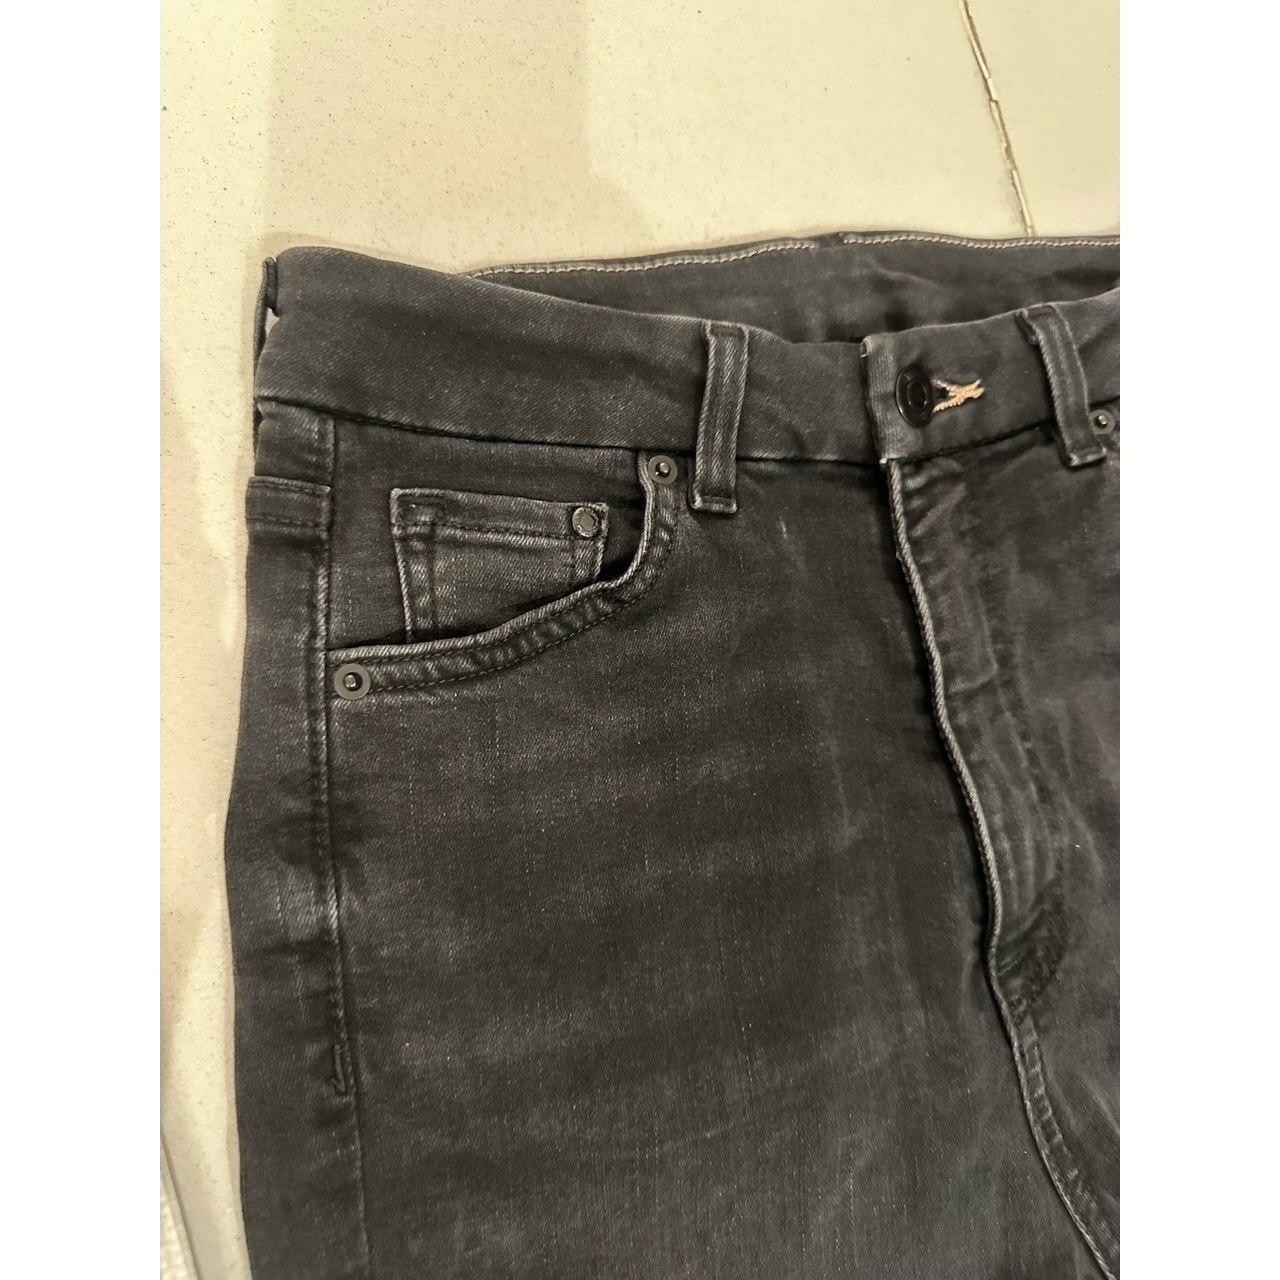 H&M Black Washed High Waist Jeans Long Pants